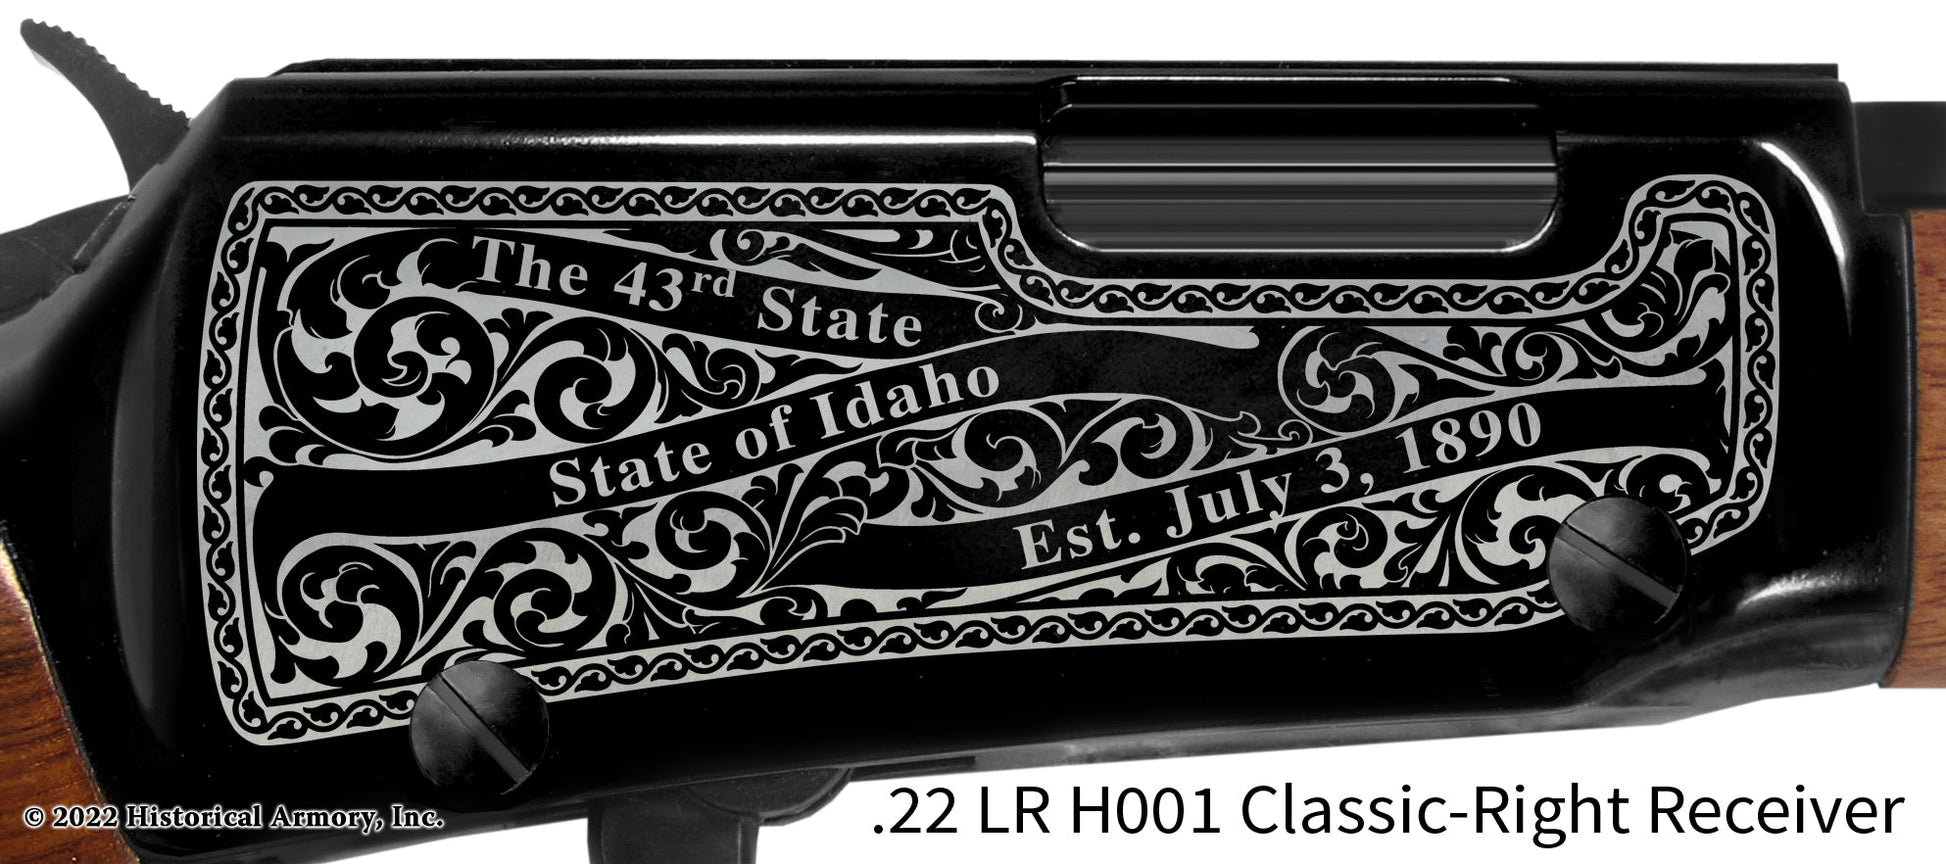 Caribou County Idaho Engraved Henry H001 Rifle